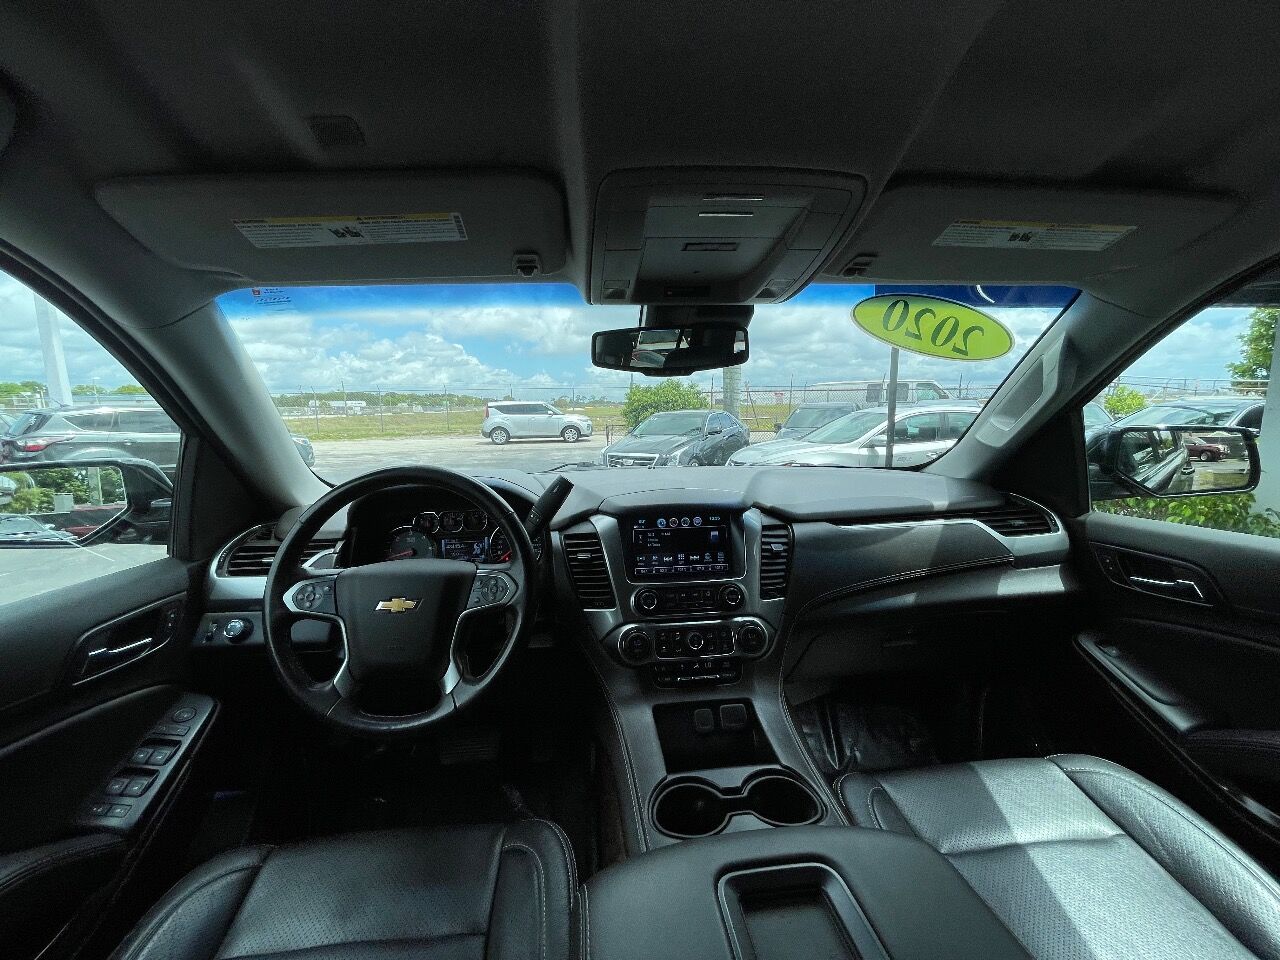 2020 Chevrolet Tahoe SUV - $29,900